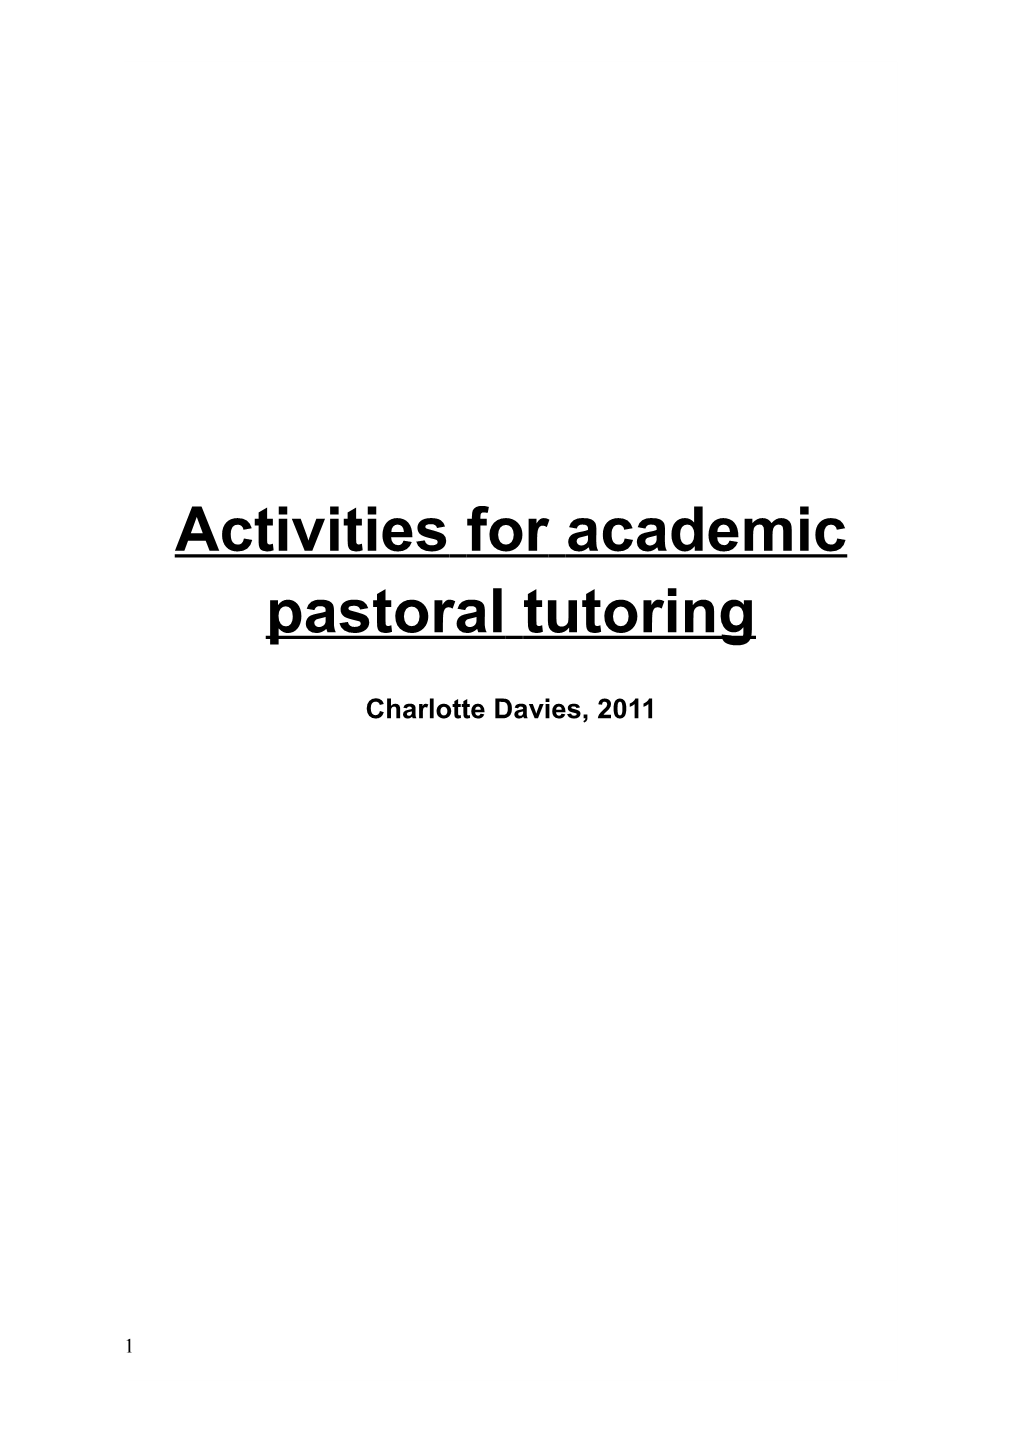 Activities for Academic Pastoral Tutoring